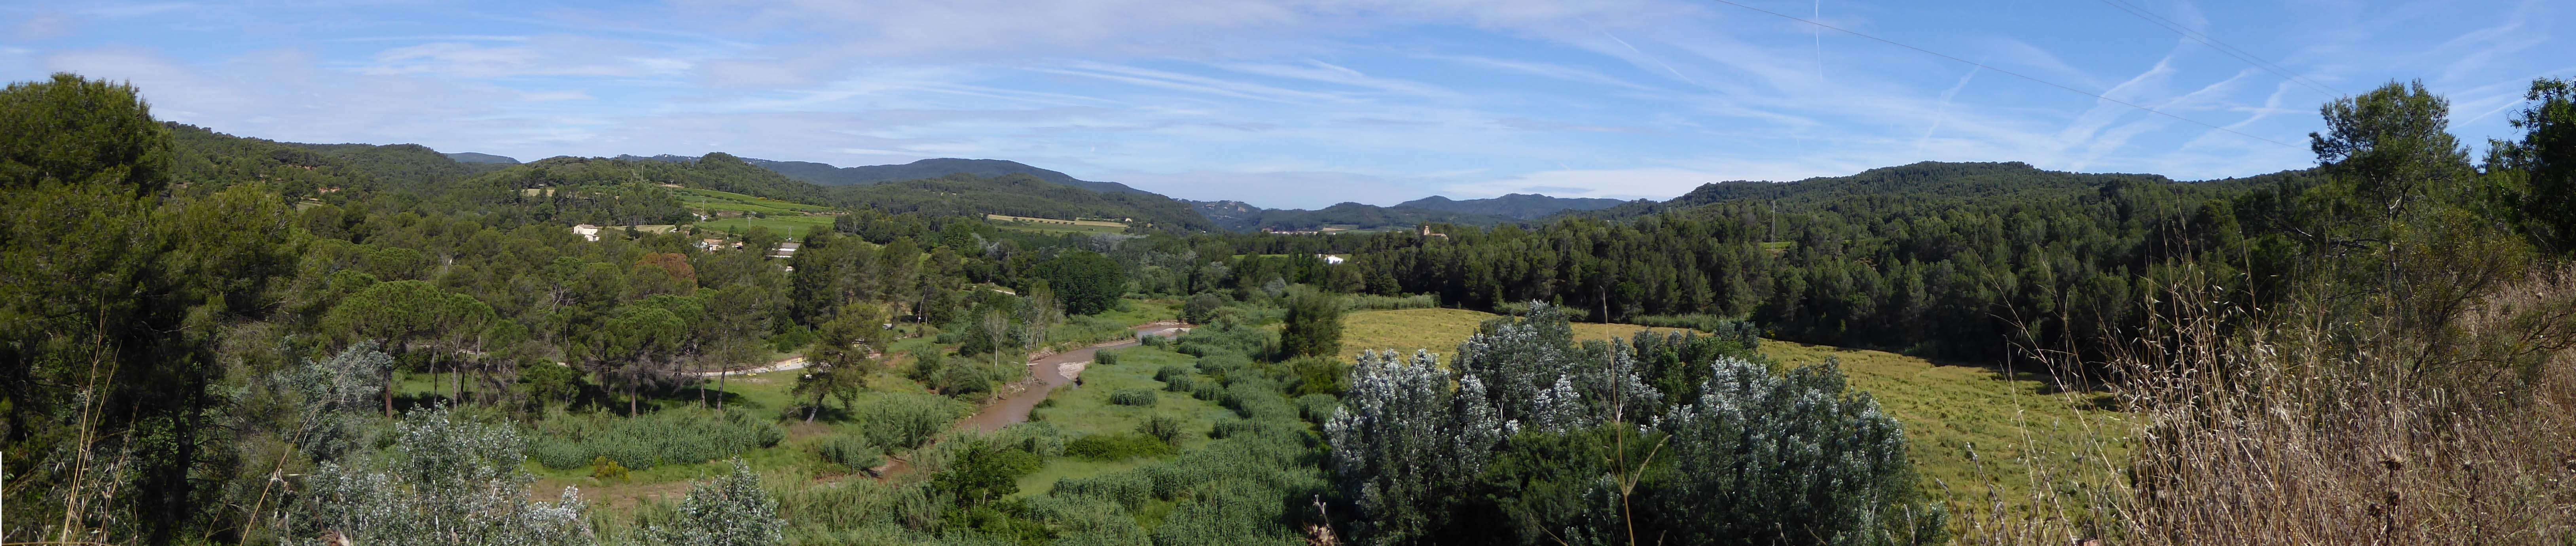 La vall de l'Anoia des de la timba de Sant Jaume Sesoliveres.JPG